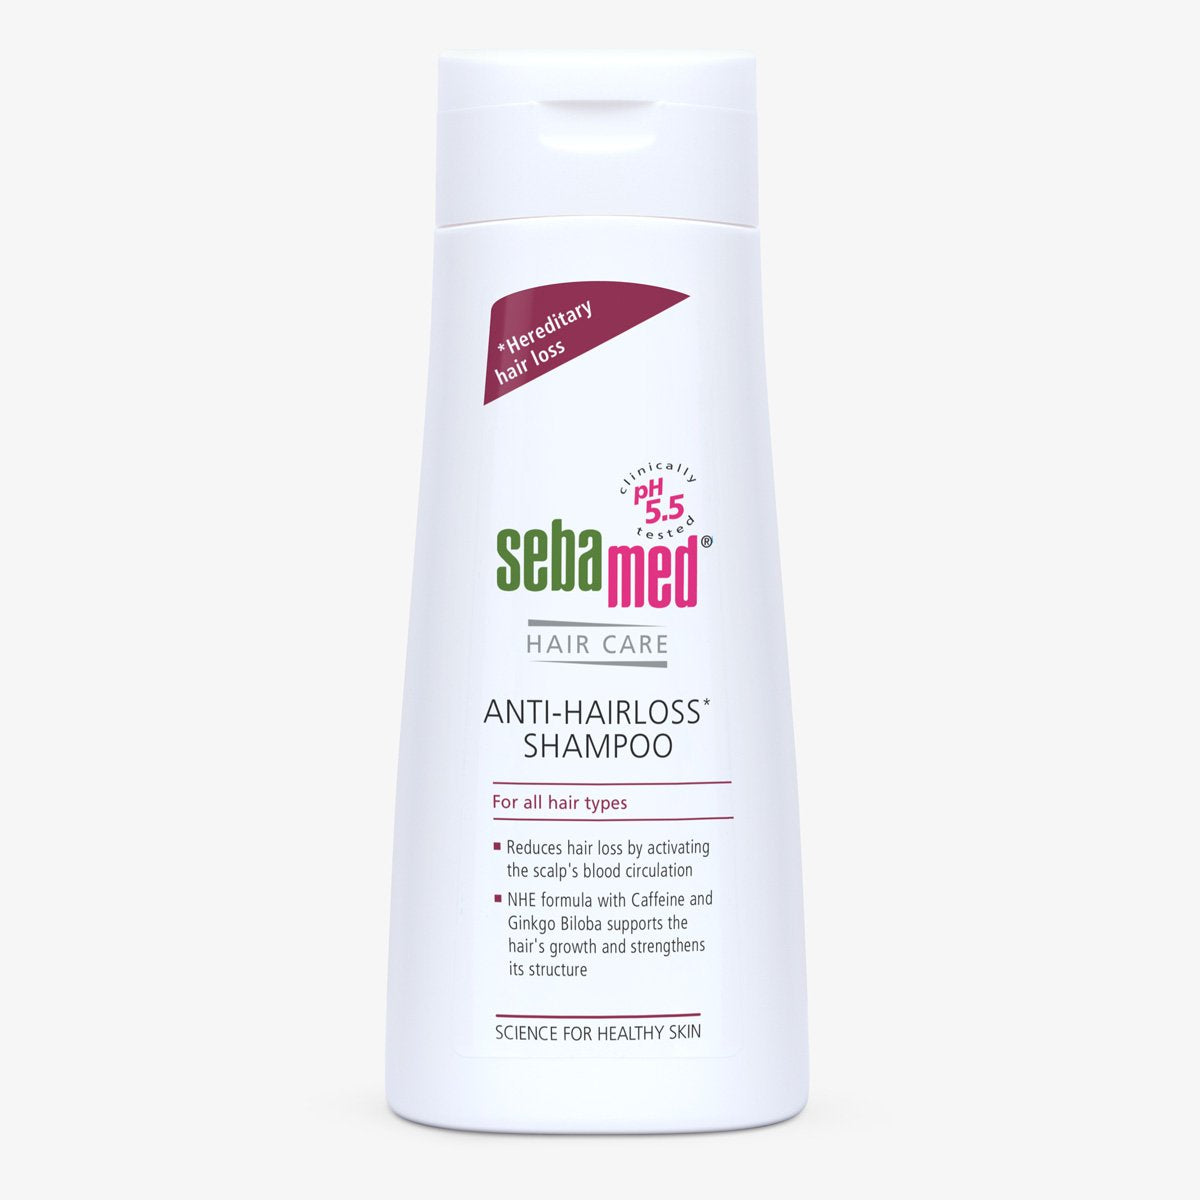 Sebamed Hair Care Anti-Hairloss Shampoo 200ml